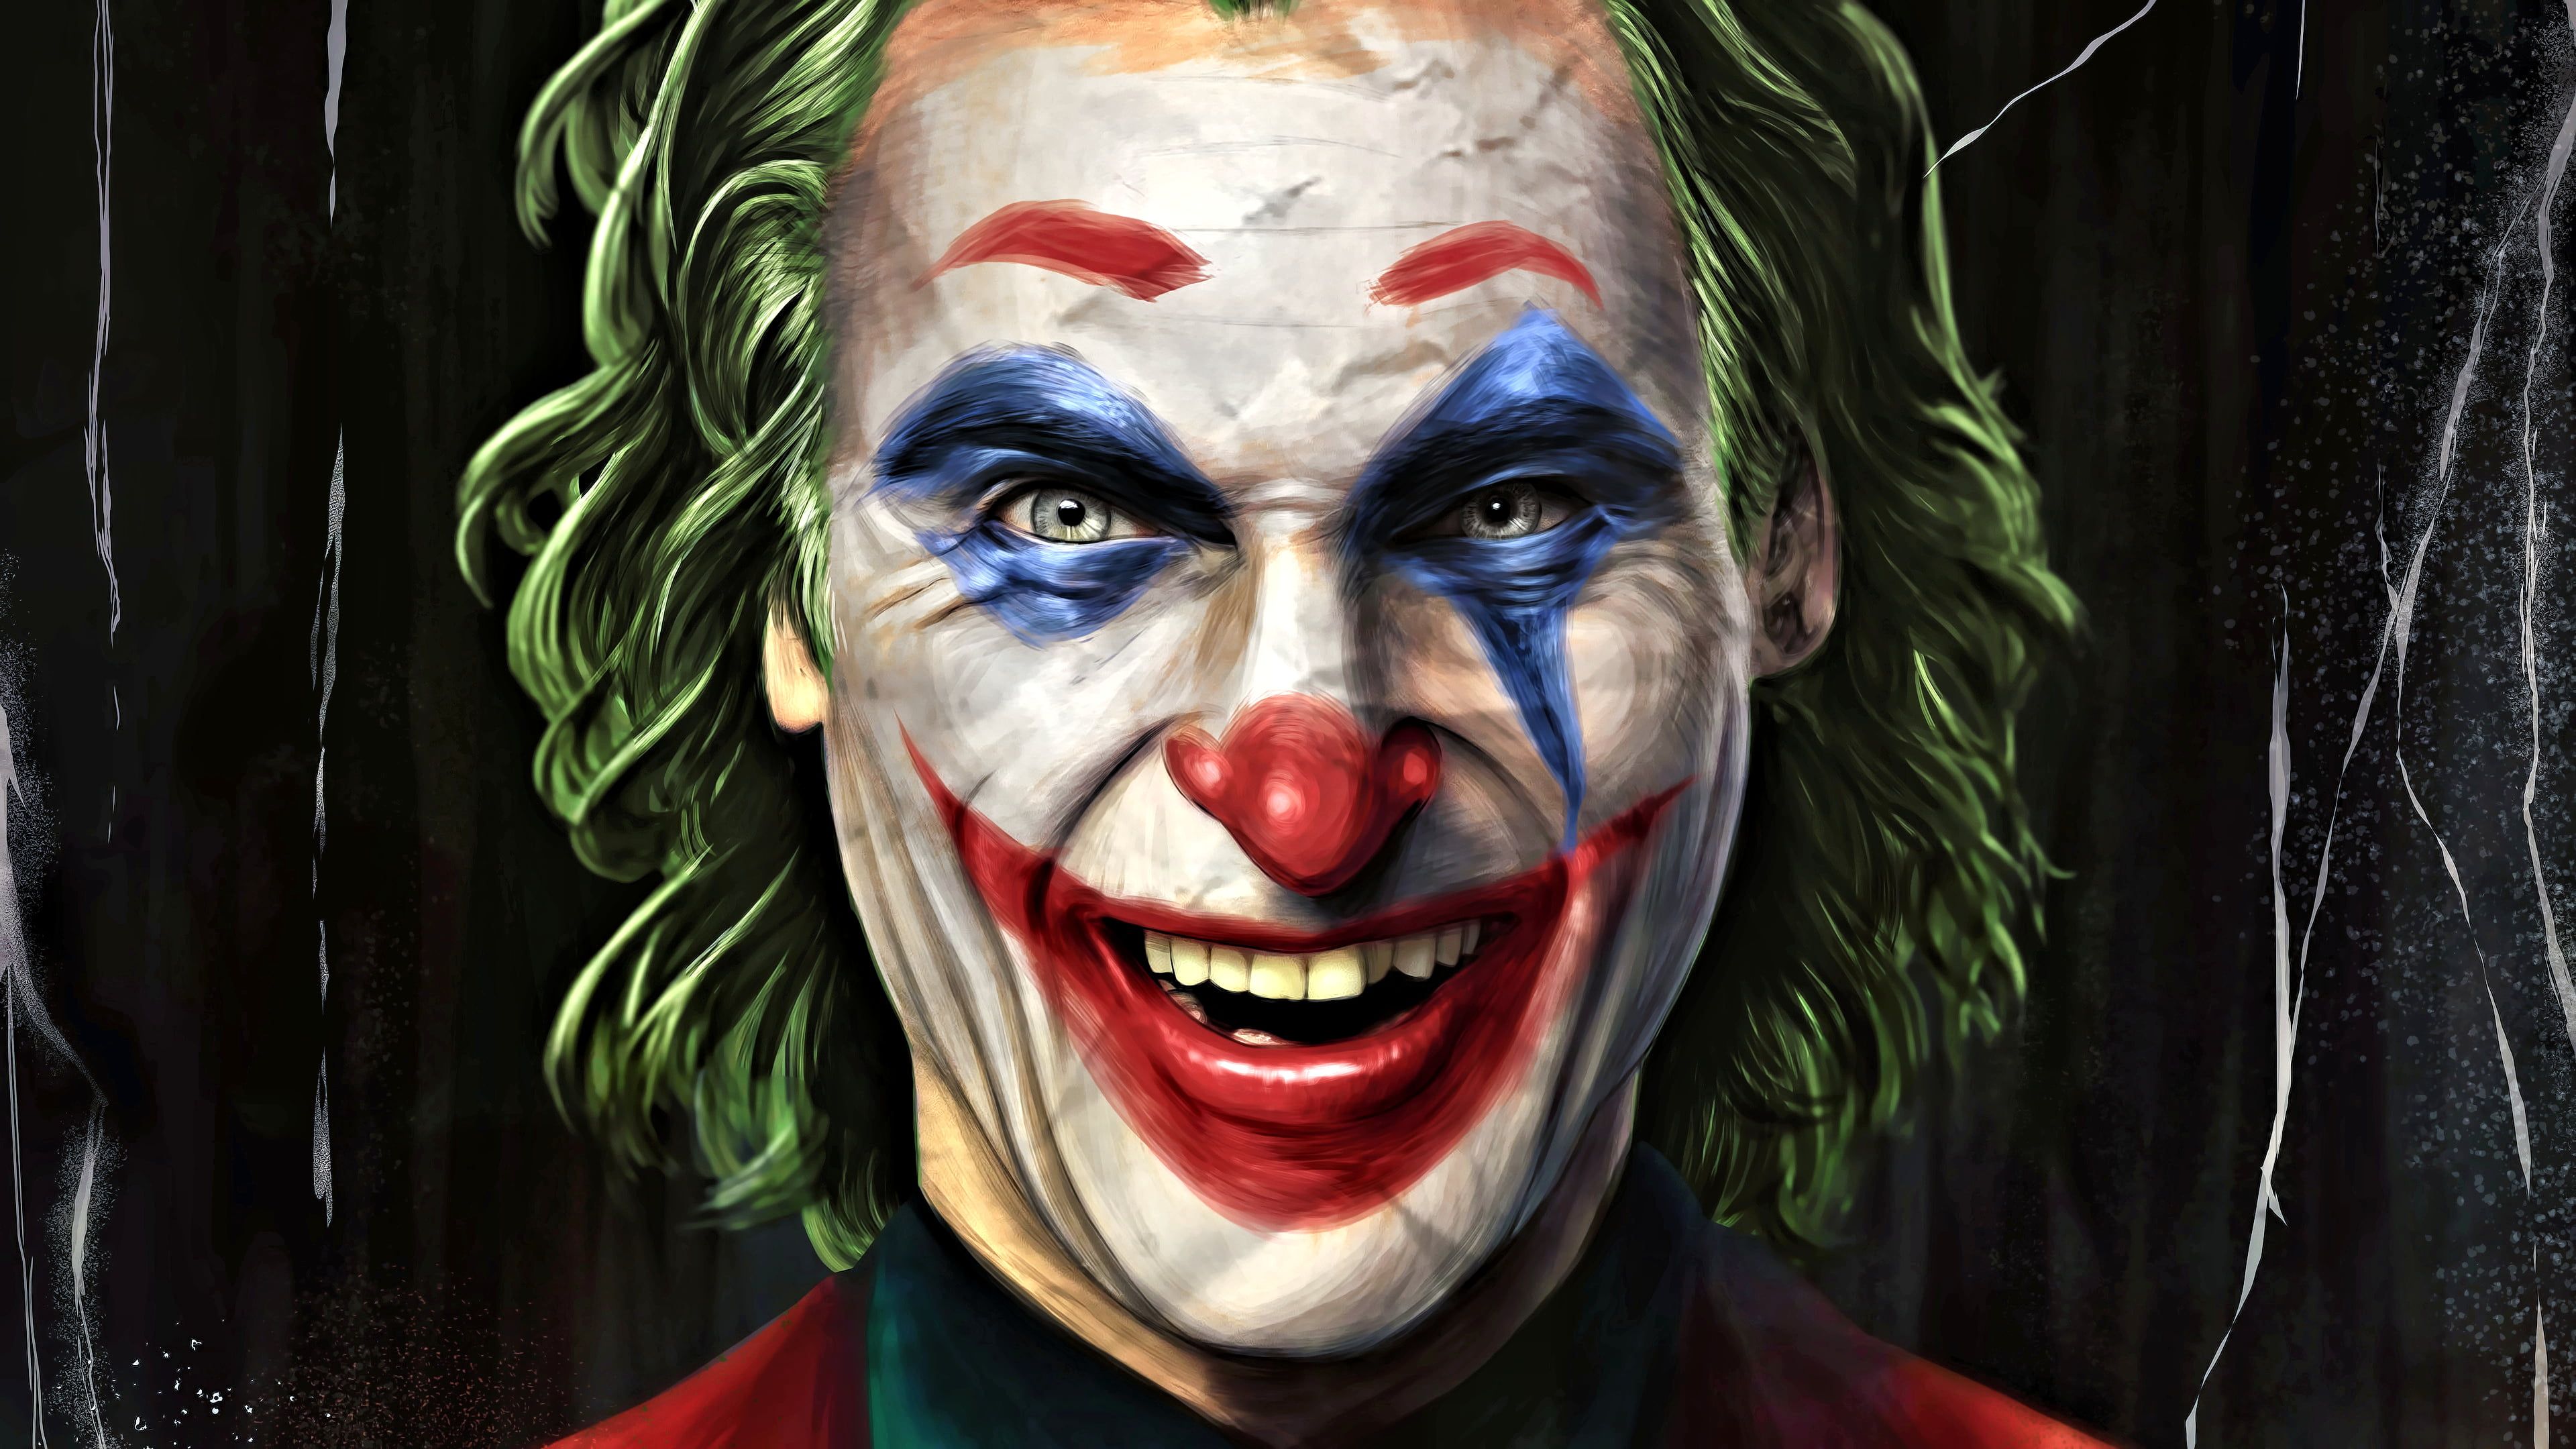 Joker HD Wallpaper Joker 2019 Movie Gotham City Paint Brushes Dc